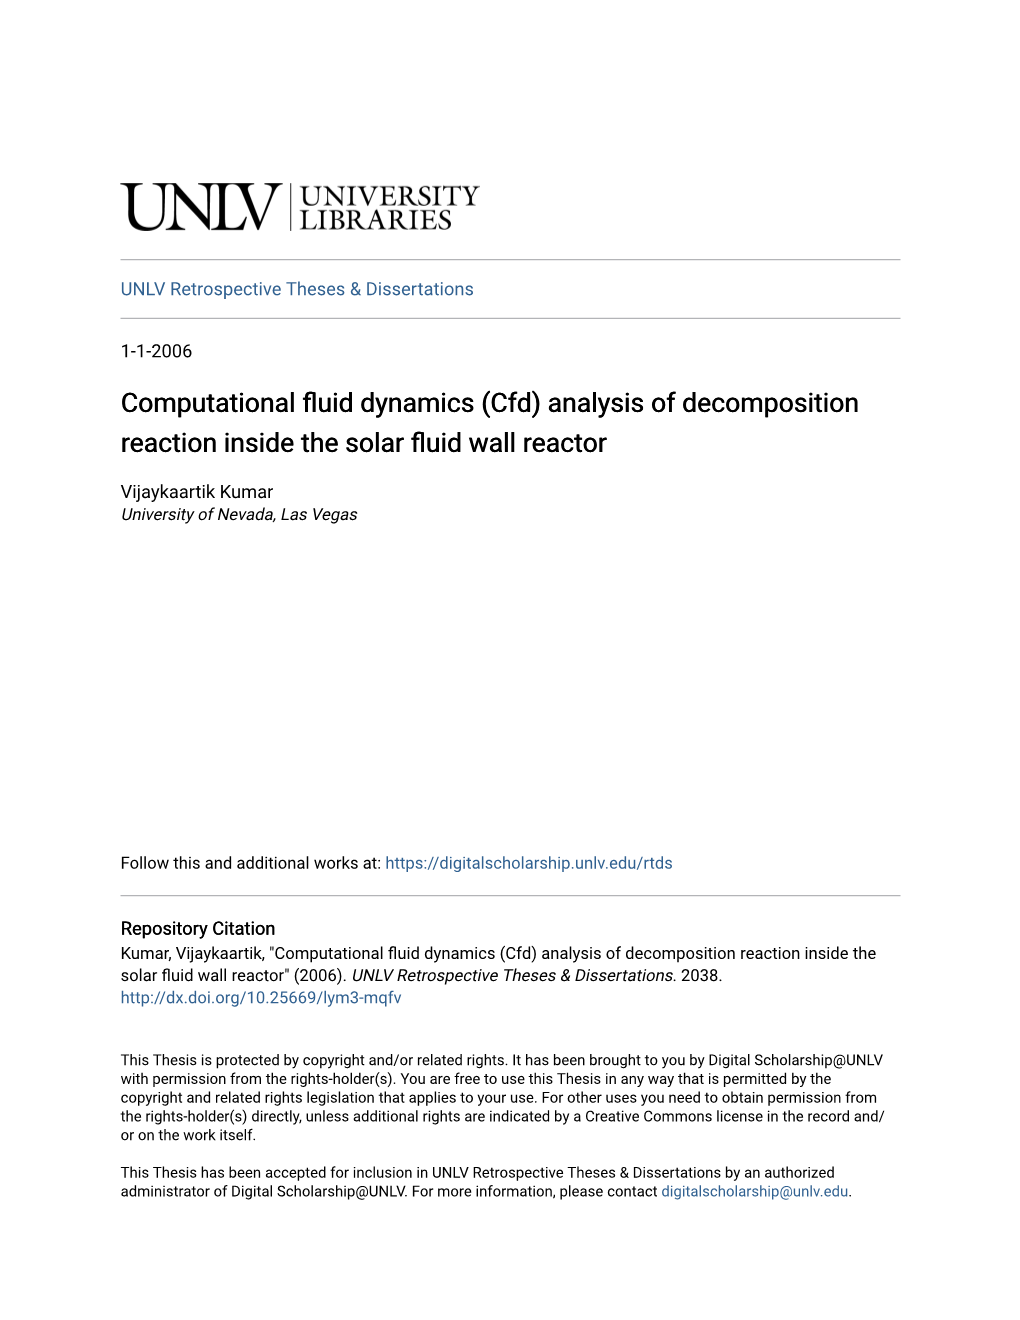 Computational Fluid Dynamics (Cfd) Analysis of Decomposition Reaction Inside the Solar Fluid Wall Eactr Or